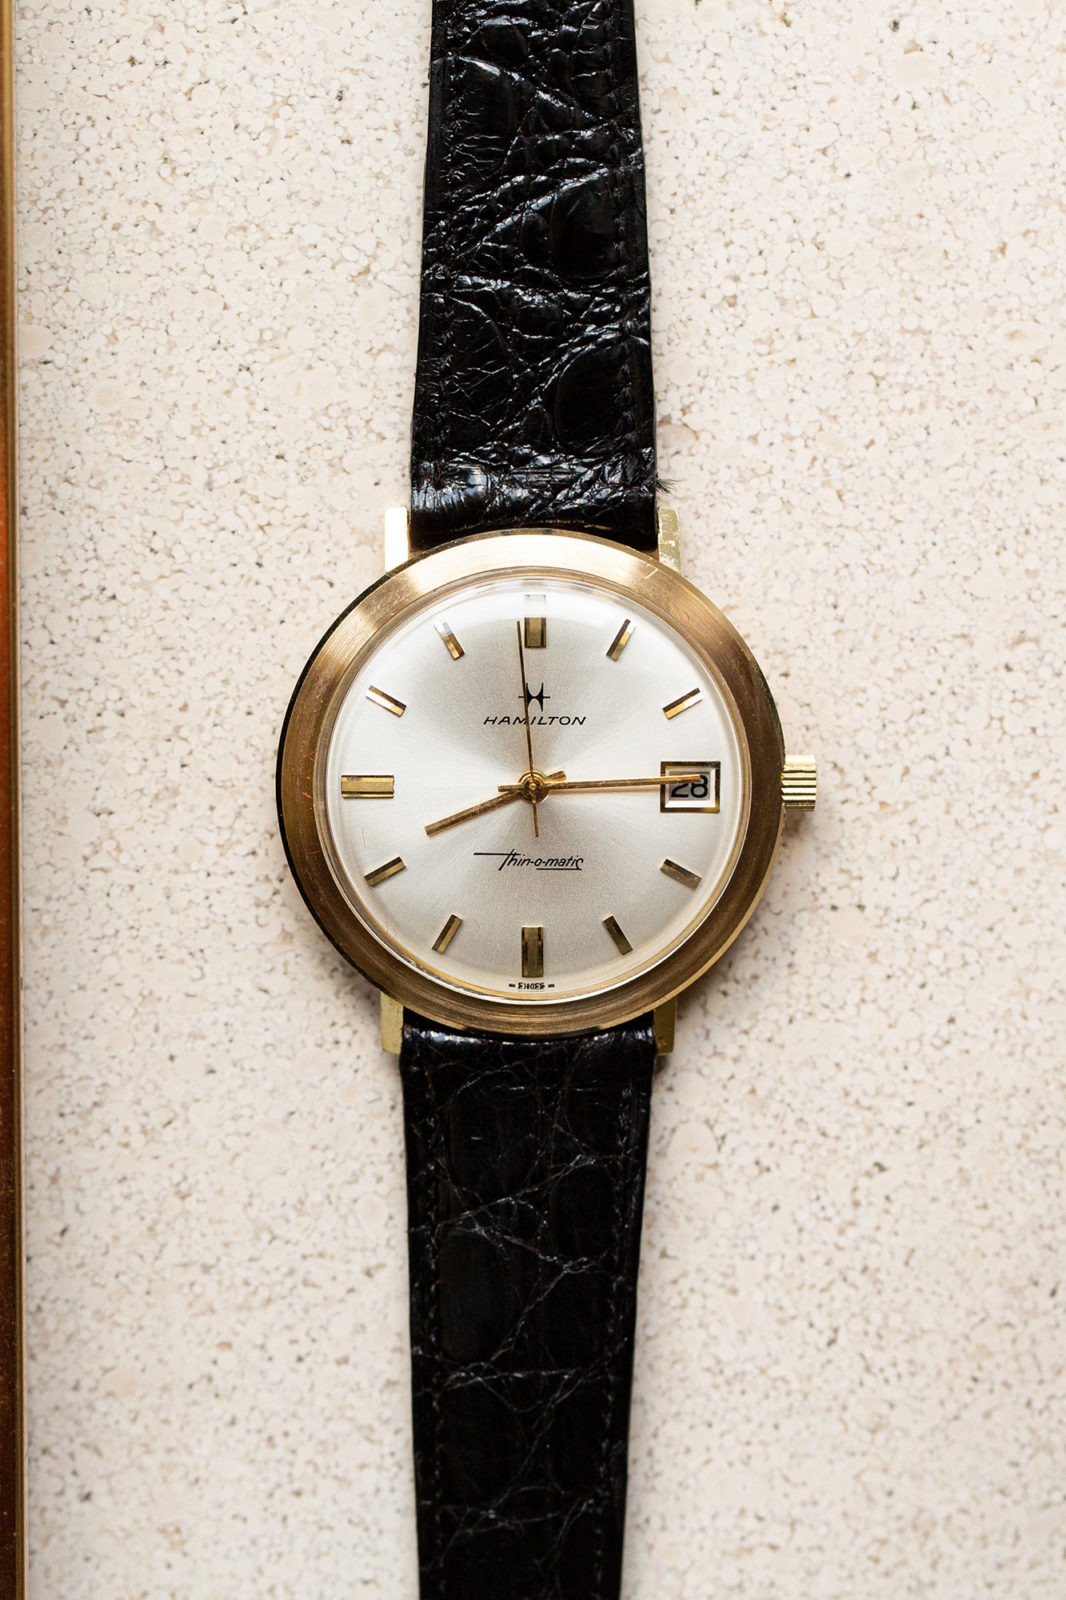 Hamilton Thin-o-Matic NOS - Sélection de montres vintage Joseph Bonnie